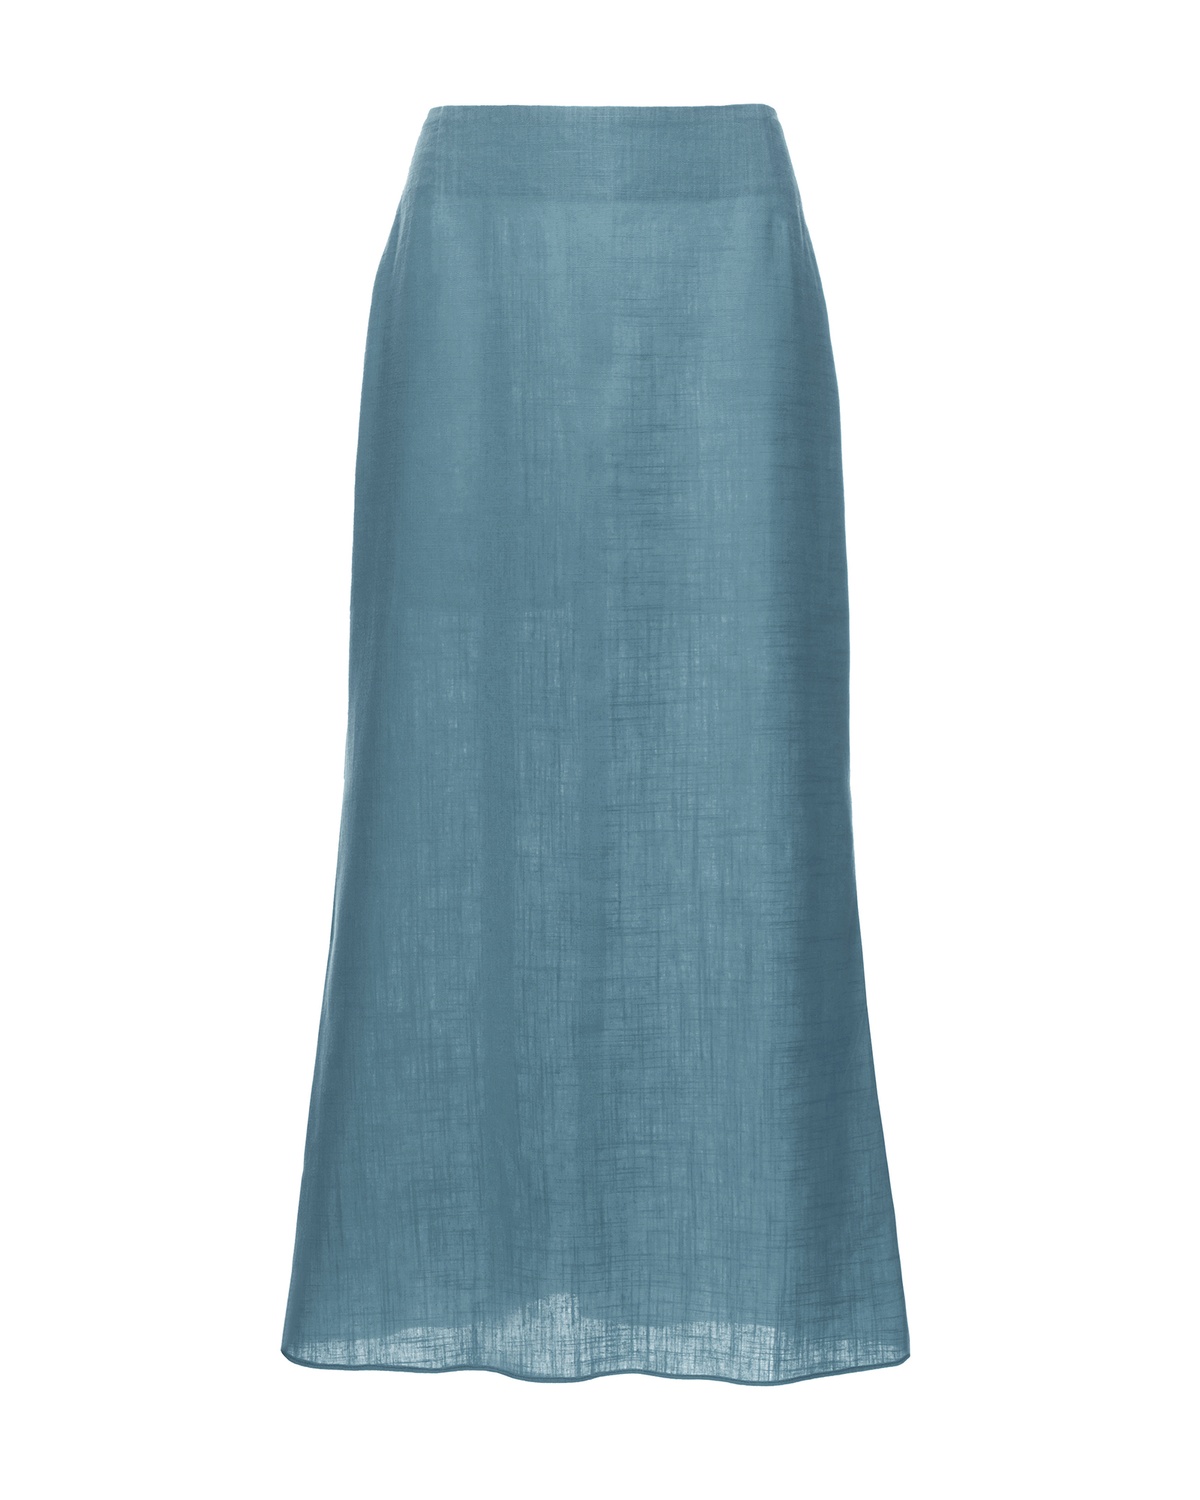 Sunset skirt, Голубой, S